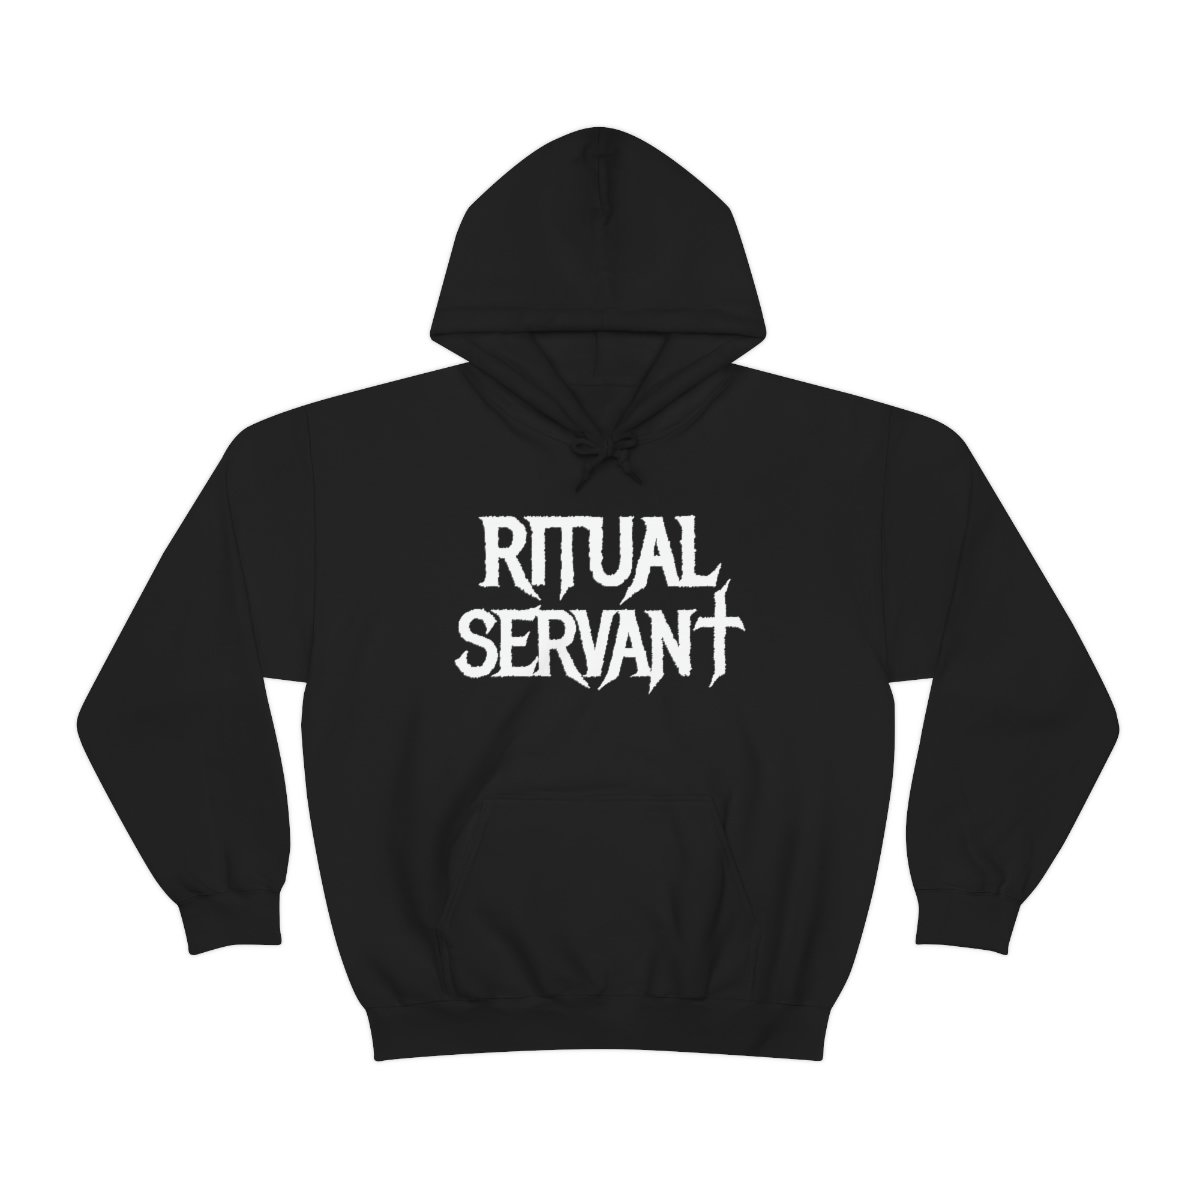 Ritual Servant Scripture Based Pullover Hooded Sweatshirt